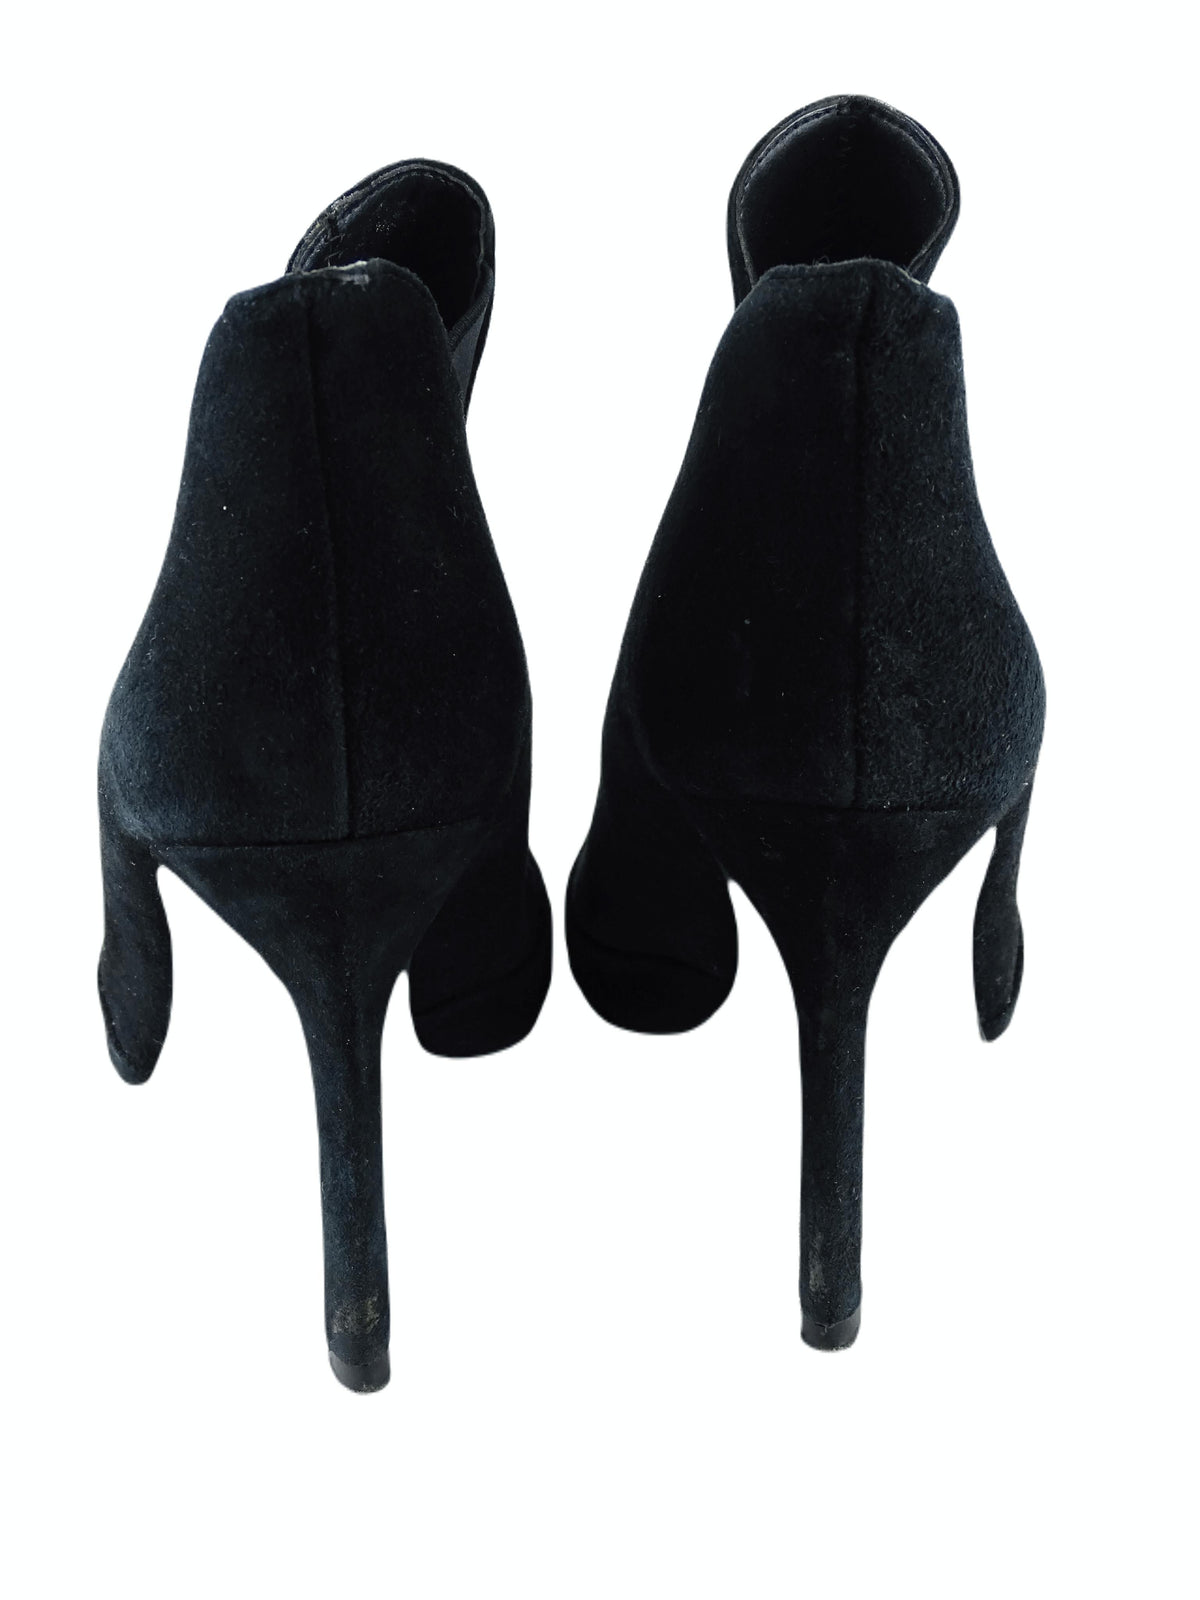 Zara Black Boots 36